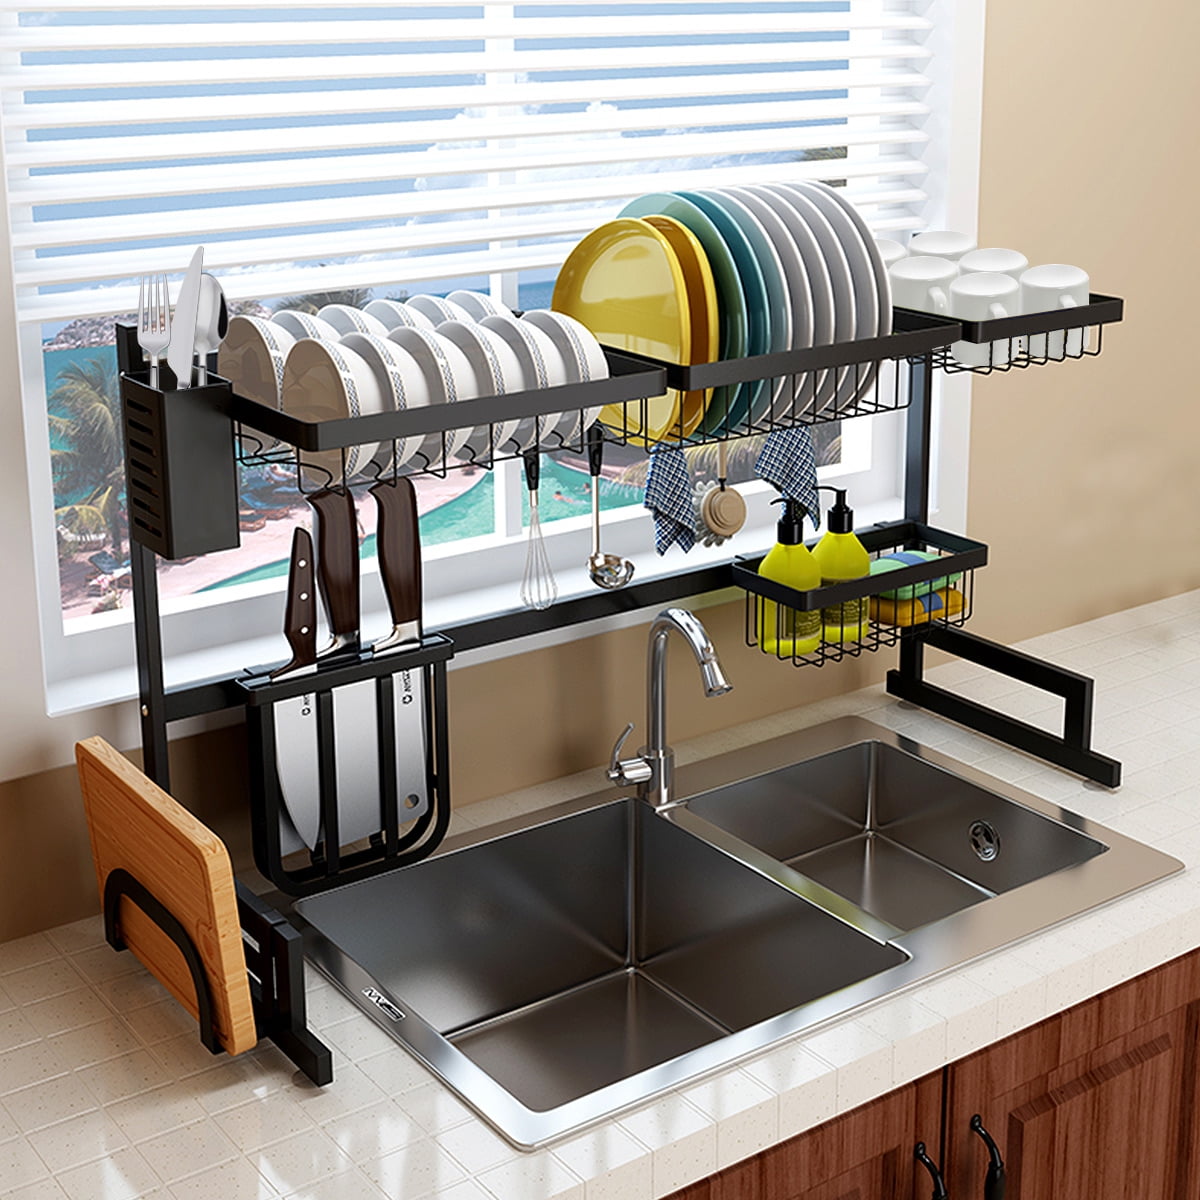 & Dining Plate Home & Living Dish Rack Storage Holder Dish Shelf Sink Drainer 